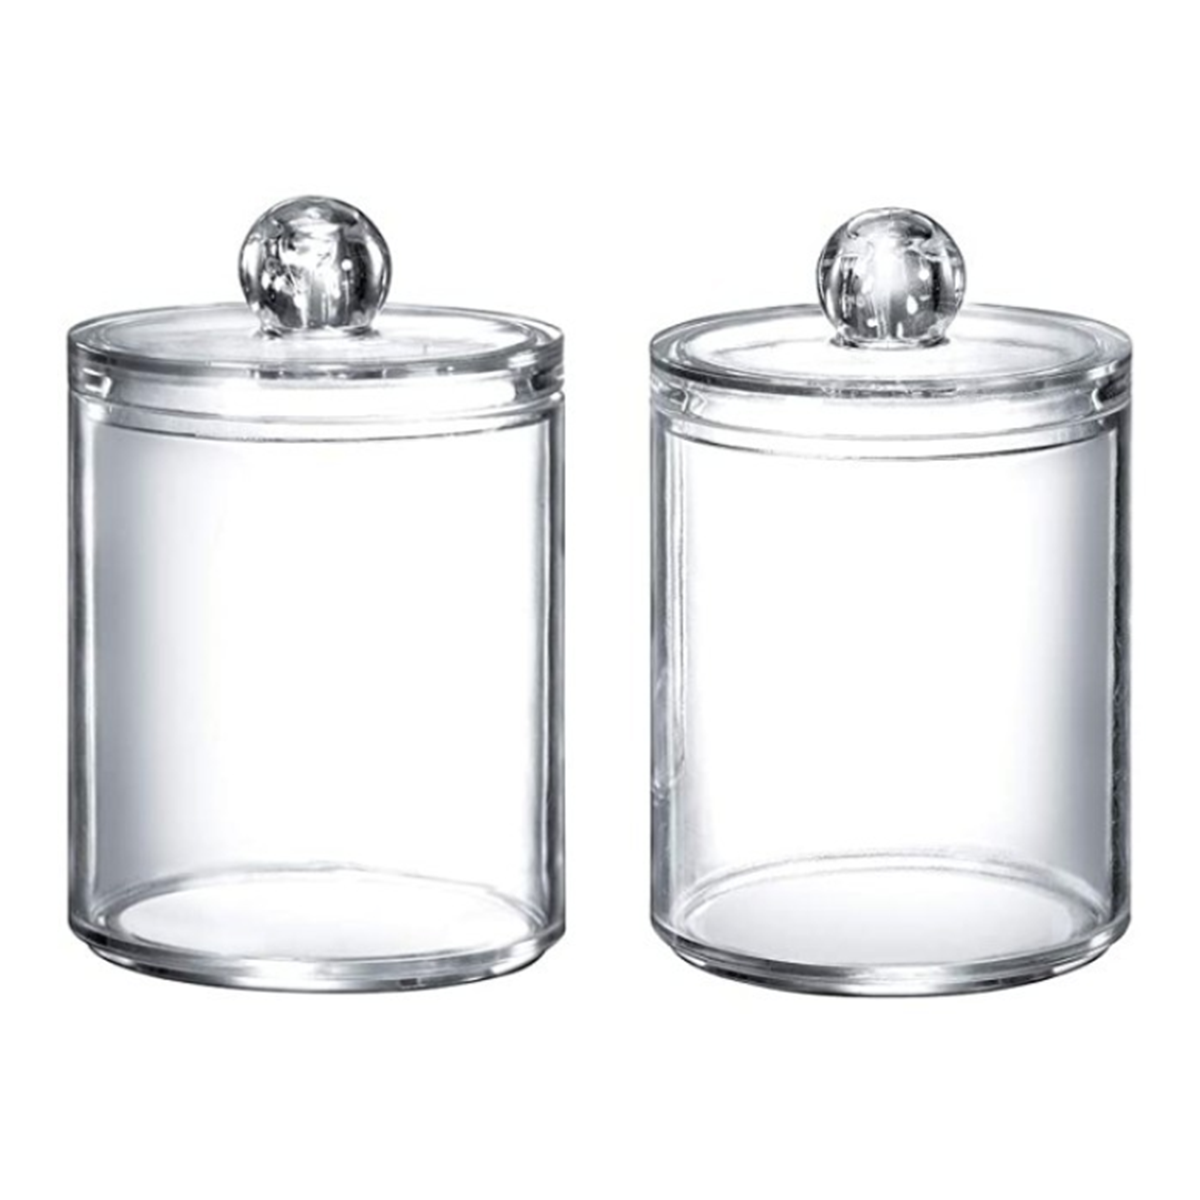 Acrylic Swab Cotton Storage High Case Boxes Bathroom Storage Canister Clear Plastic Acrylic Jar For Cotton Ball Swab